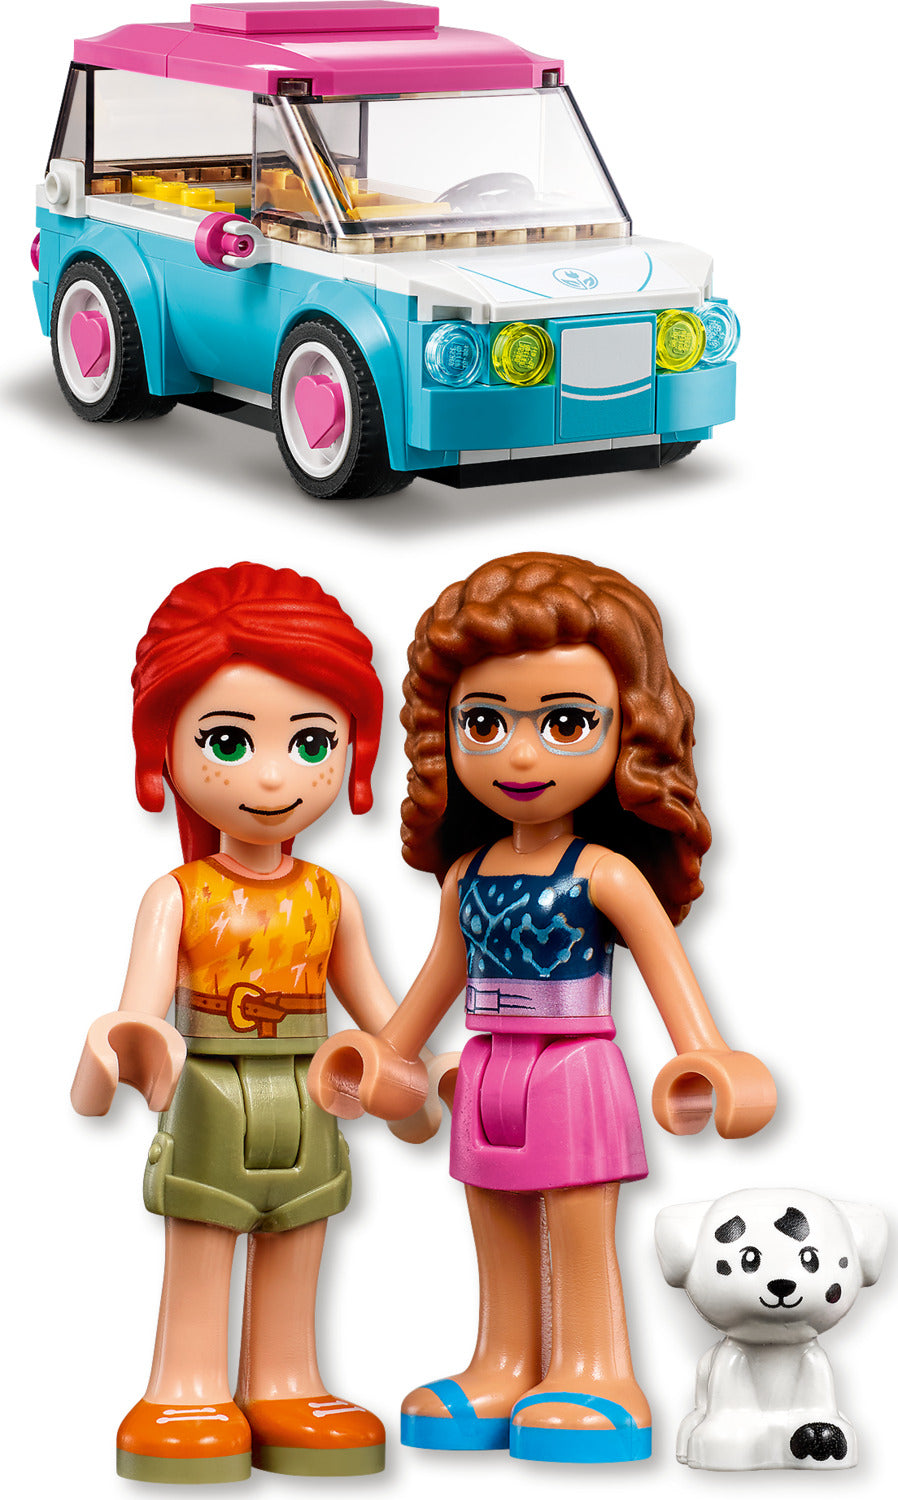 LEGO® Friends: Olivia&#39;s Electric Car